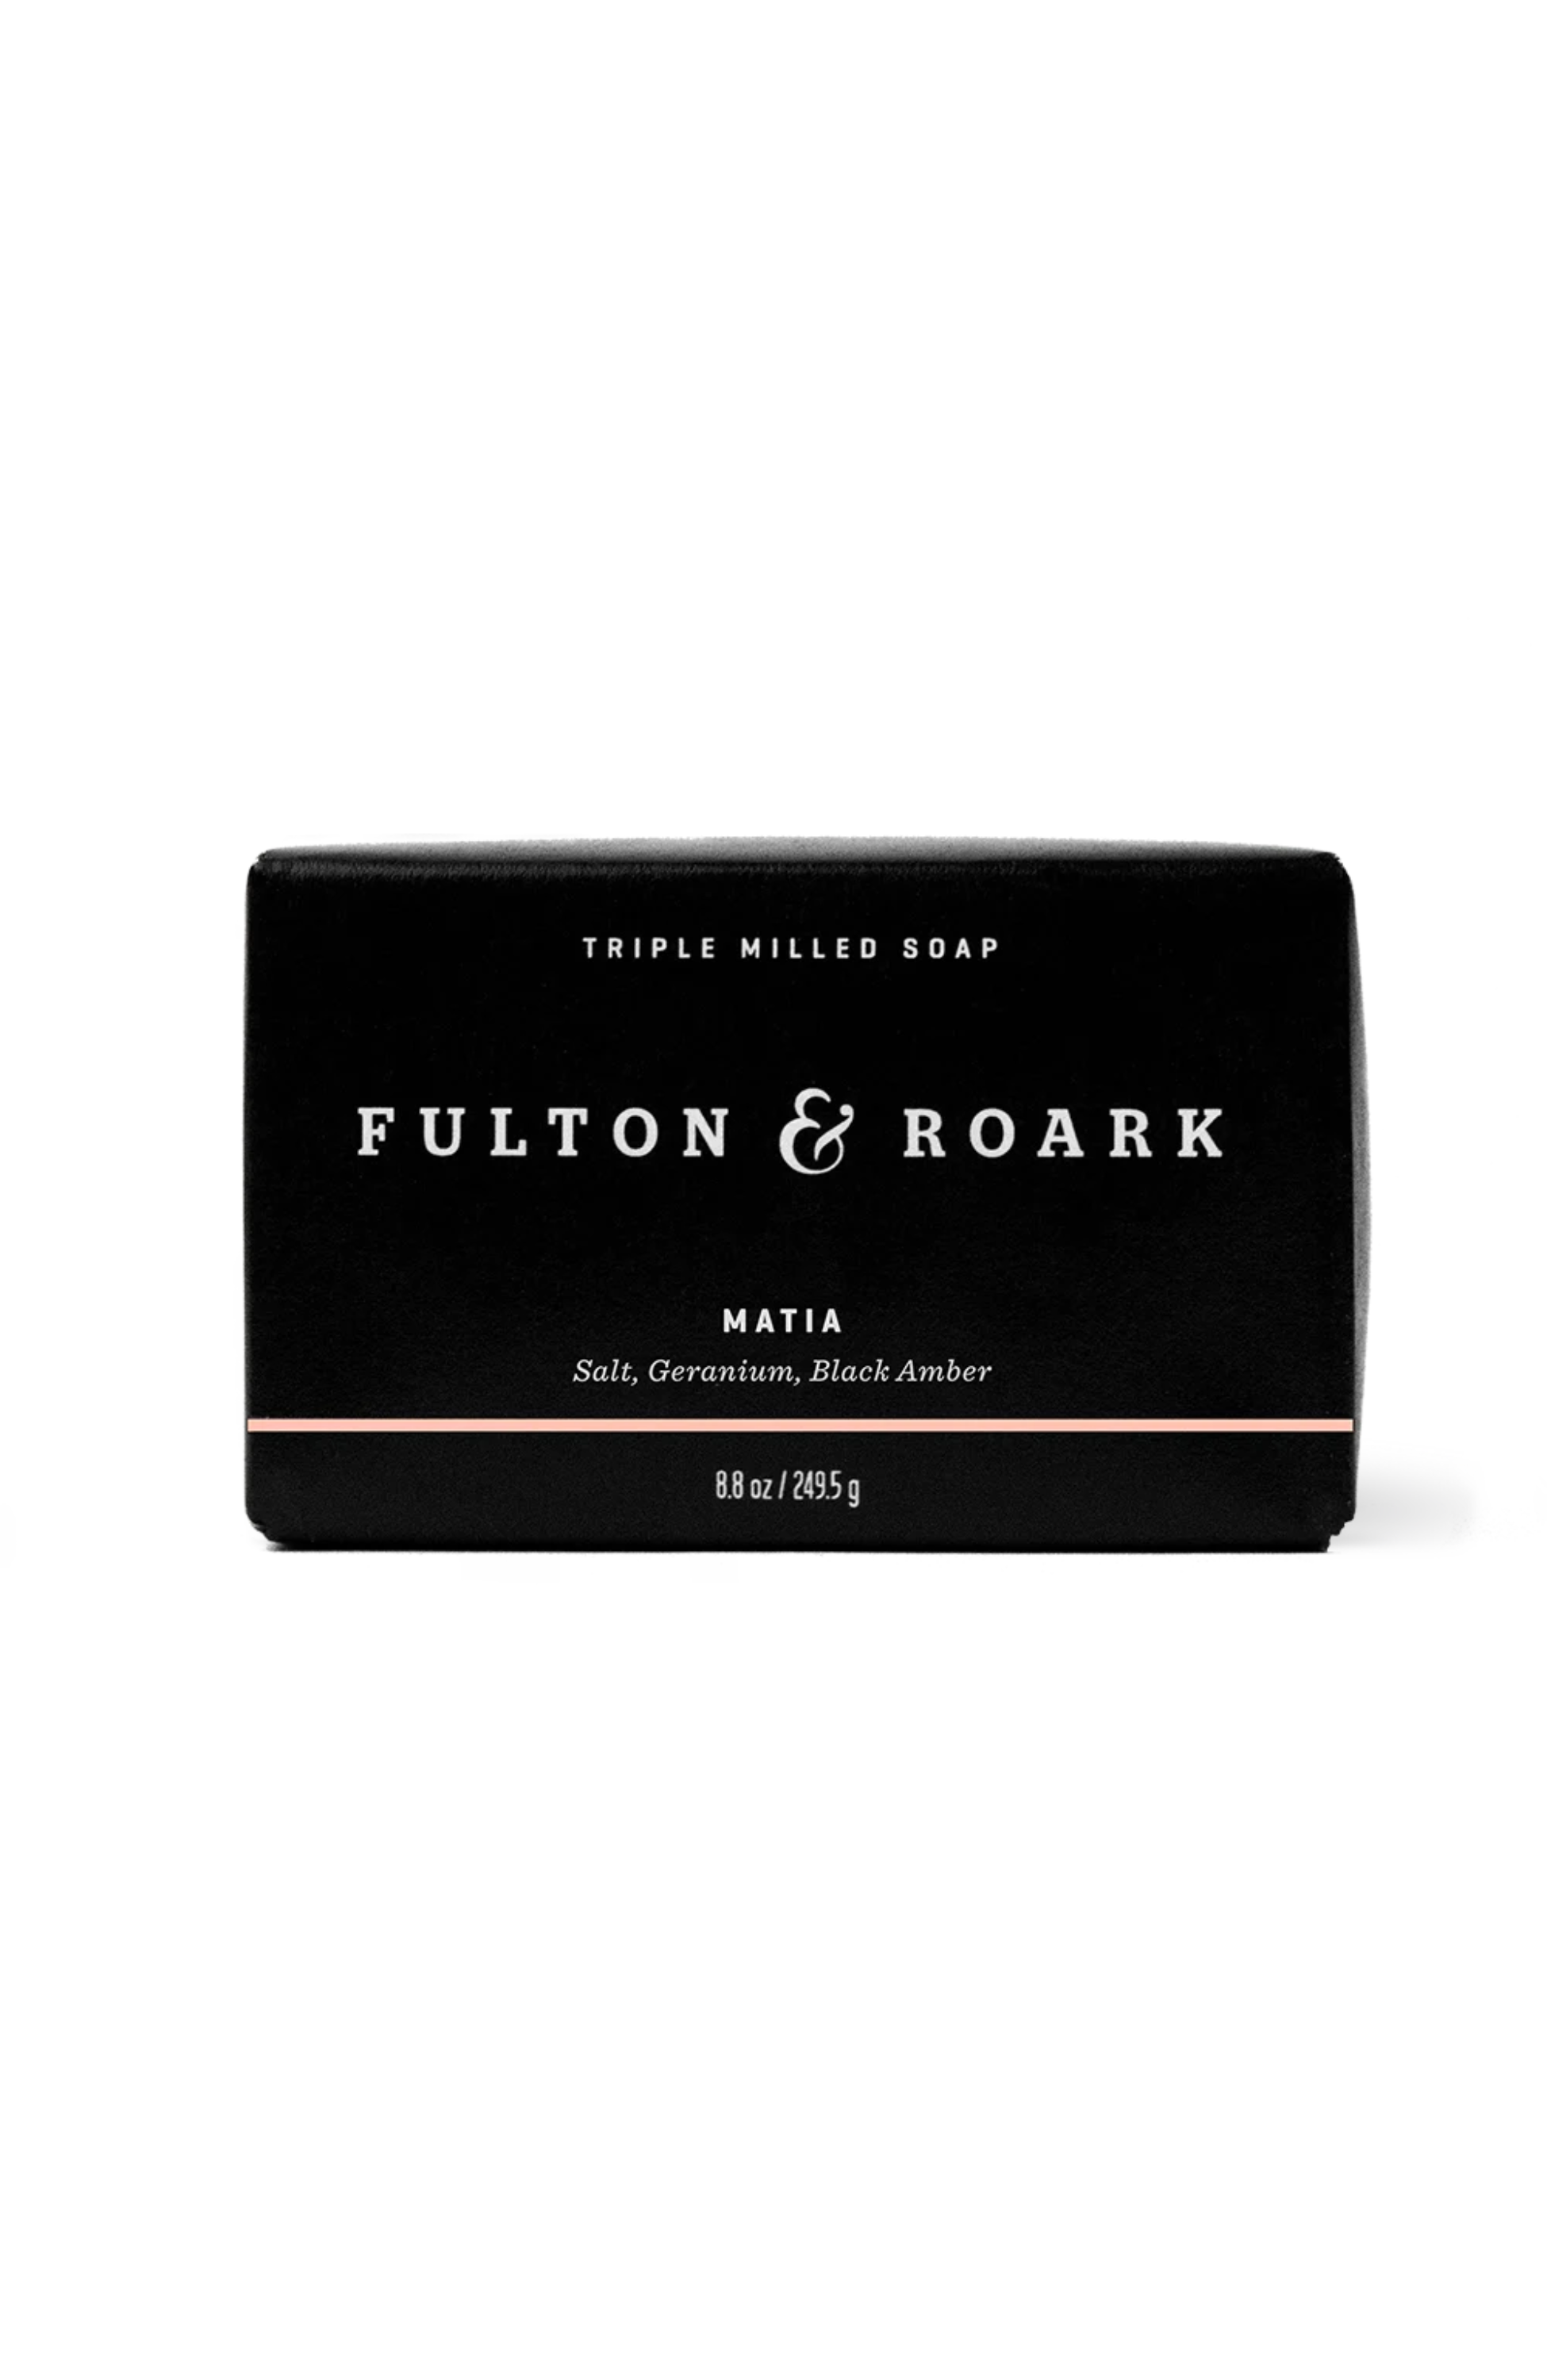 Black Amber Bar Soap